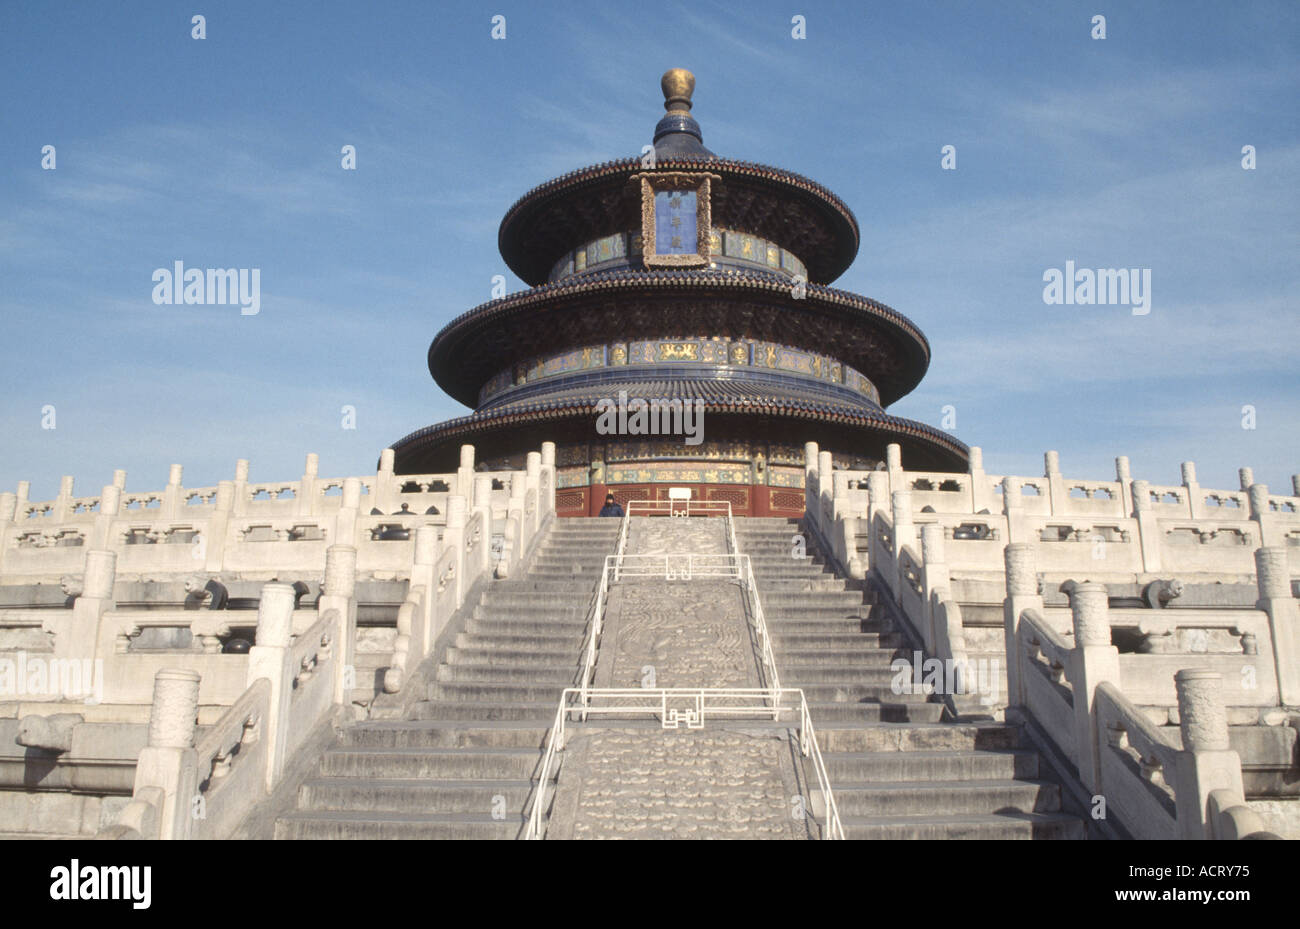 Die Halle der Ernte Gebete, Qinian Dian, Peking, China Stockfoto